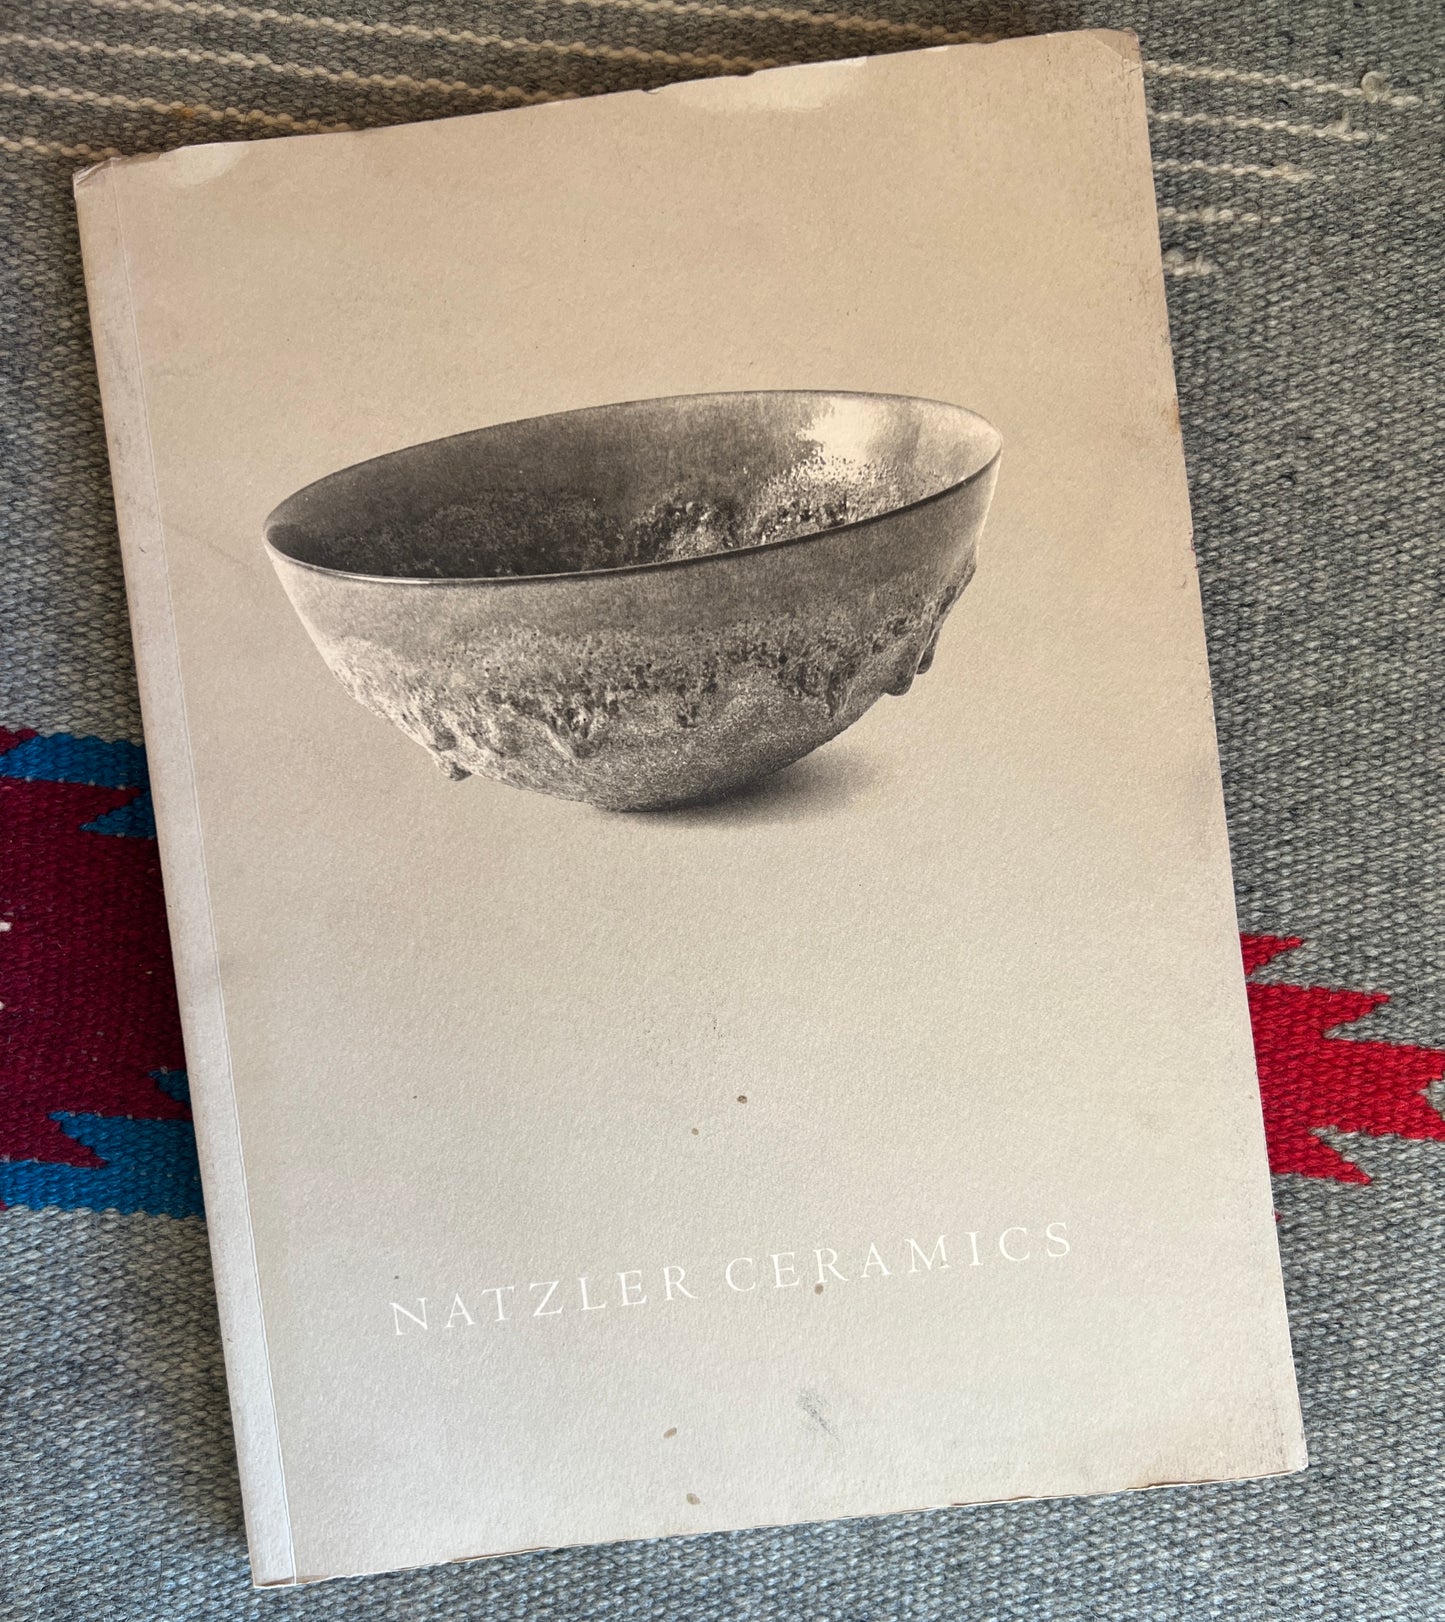 Natzler Ceramics - Catalog of Collection Mrs. Leonard M. Sperry - Los Angeles County Museum of Art